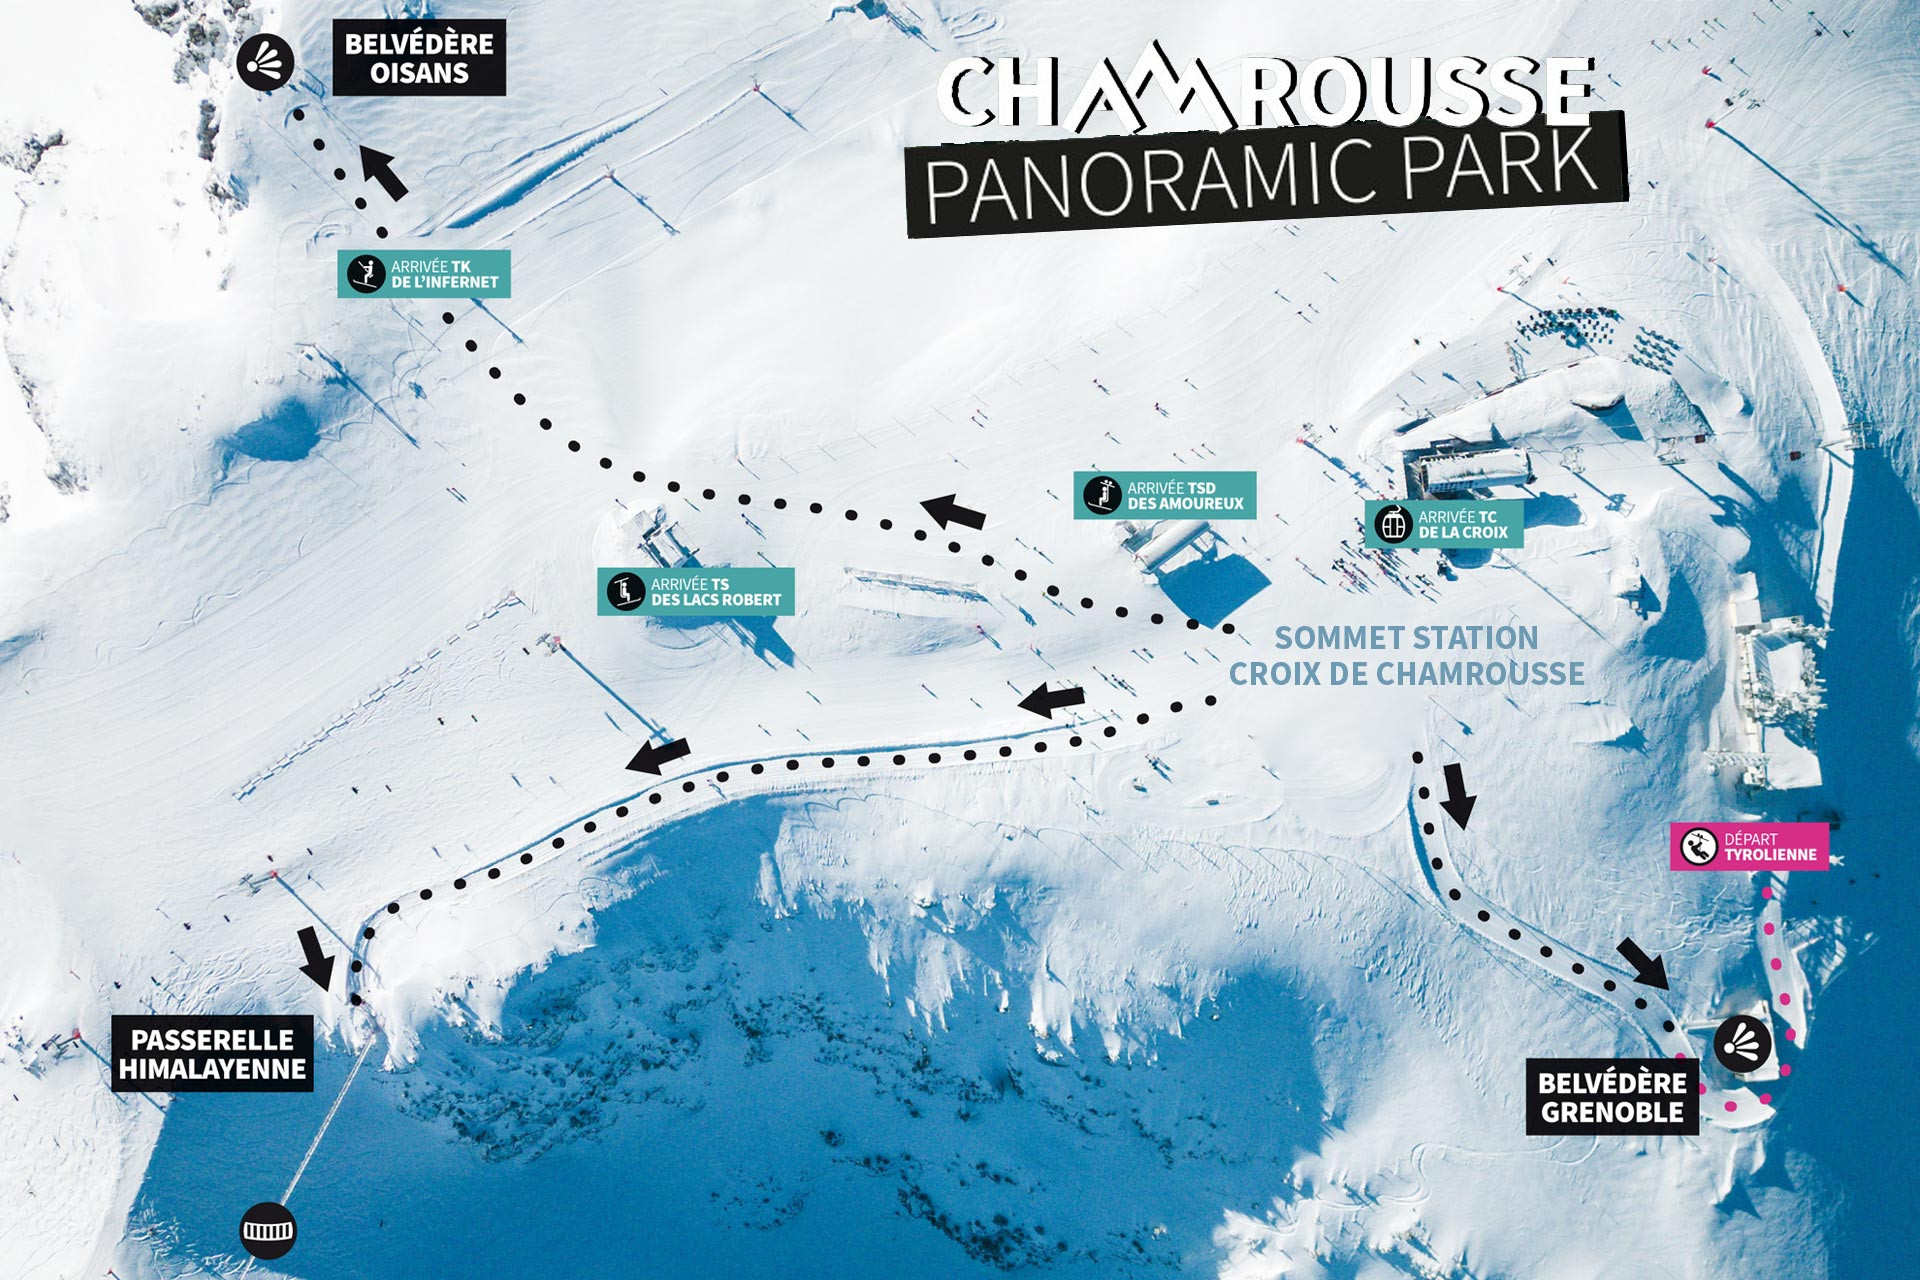 Chamrousse plan panoramic park hiver balade sommet belvèdere passerelle himalayenne station ski montagne grenoble isère alpes france - © CA - OT Chamrousse